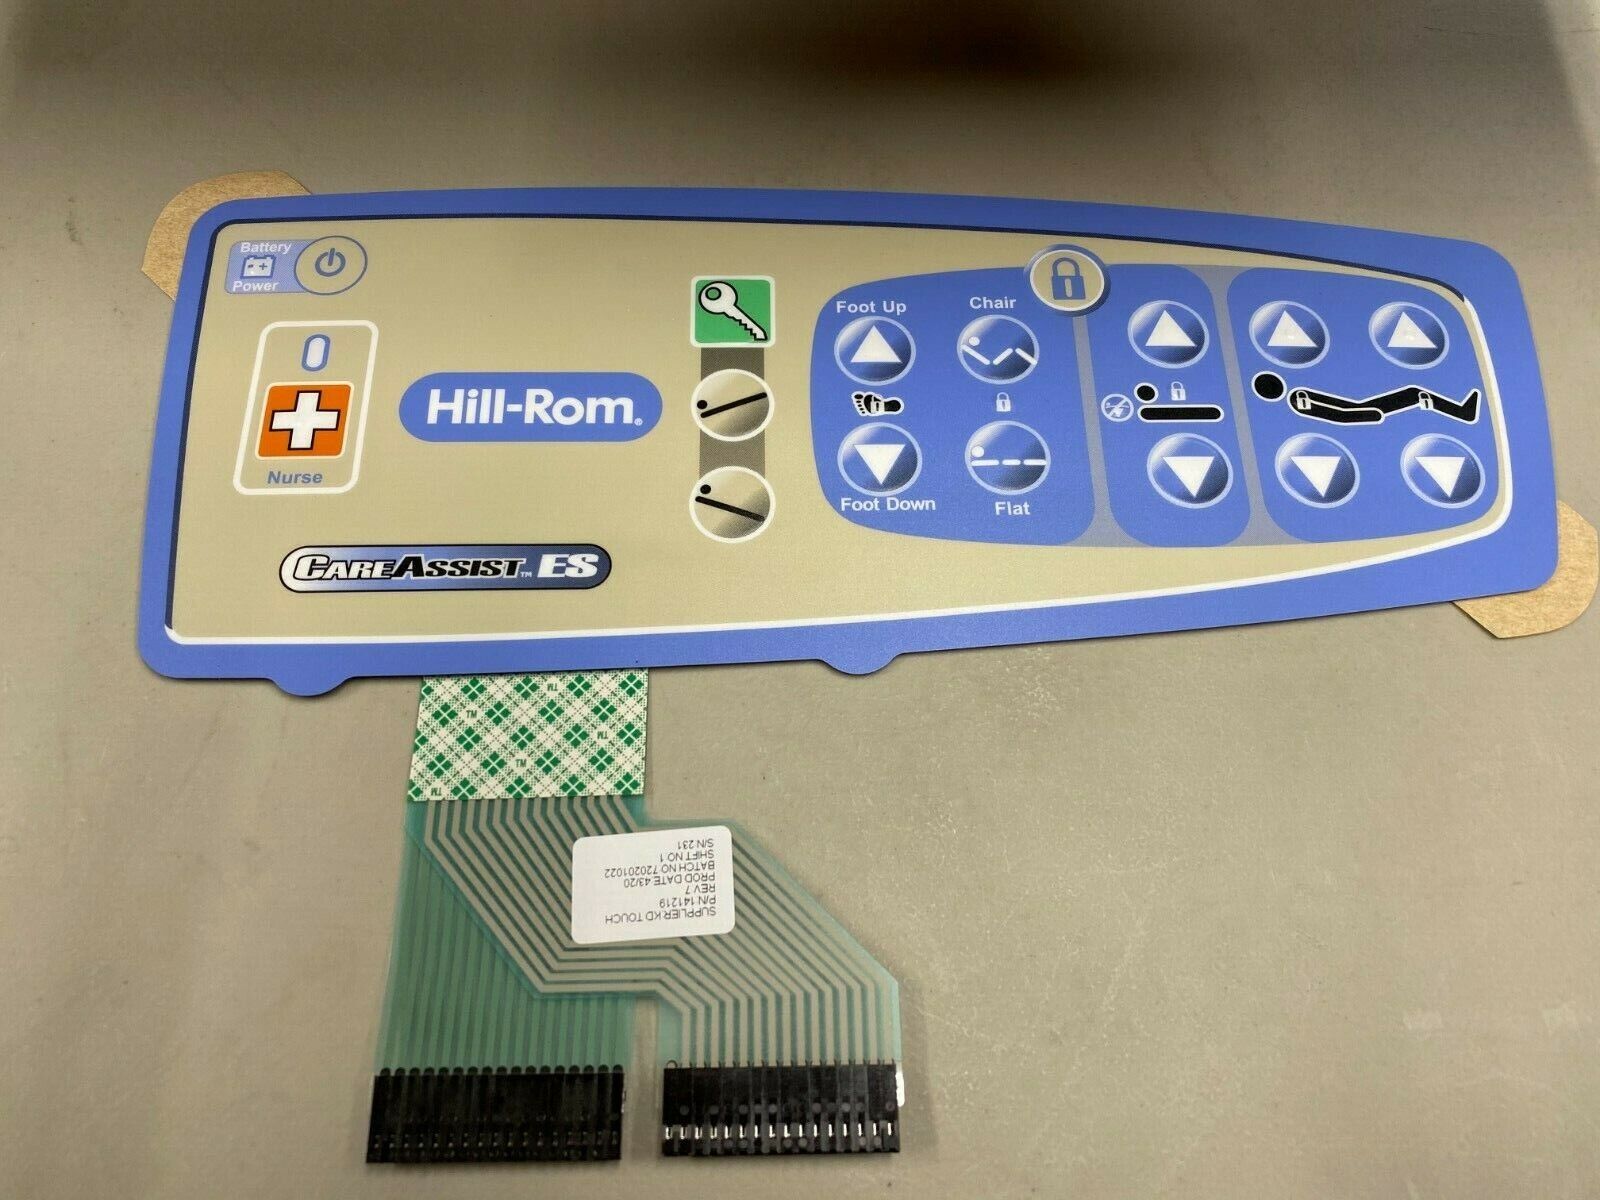 Hill-rom Careassist Label Gc Controls Rh 141219